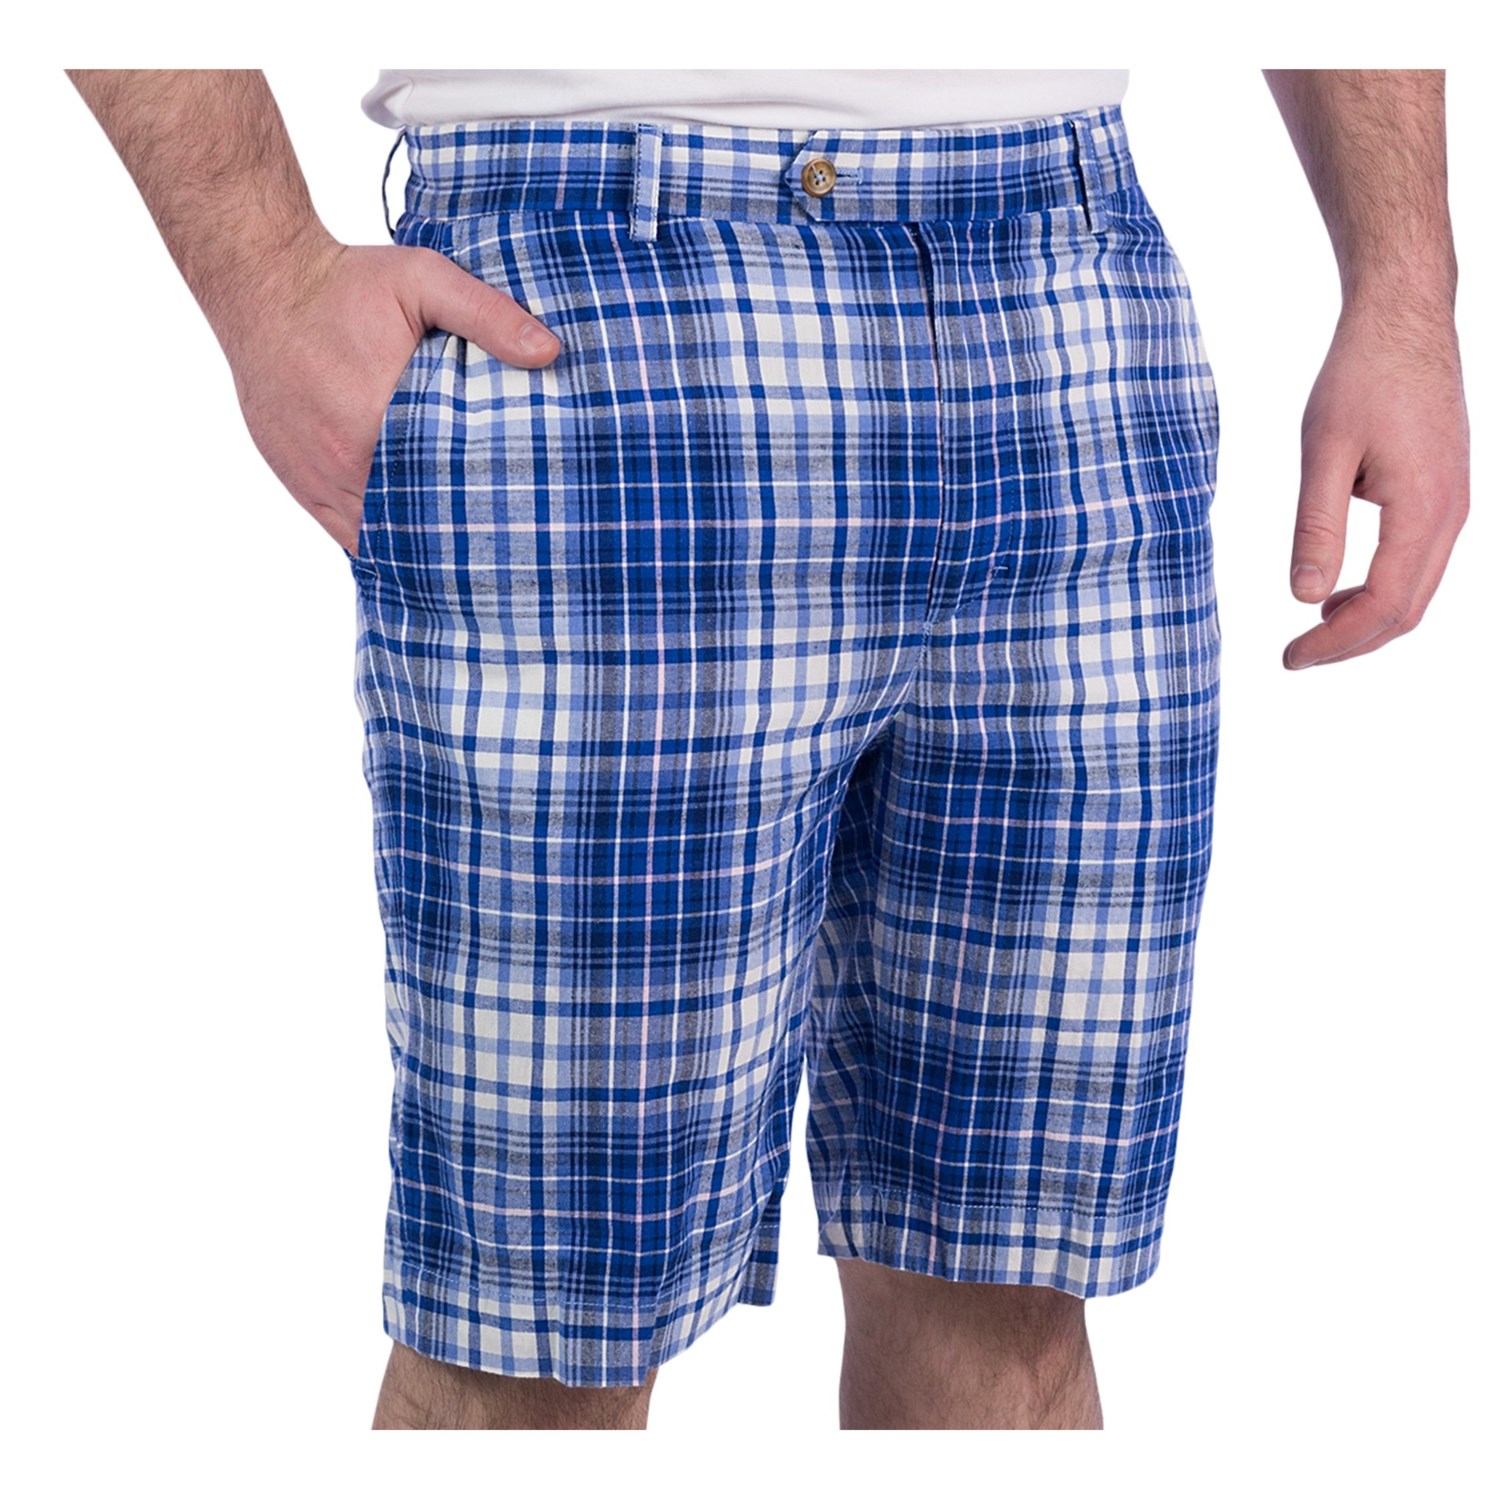 Plaid Shorts For Men 69